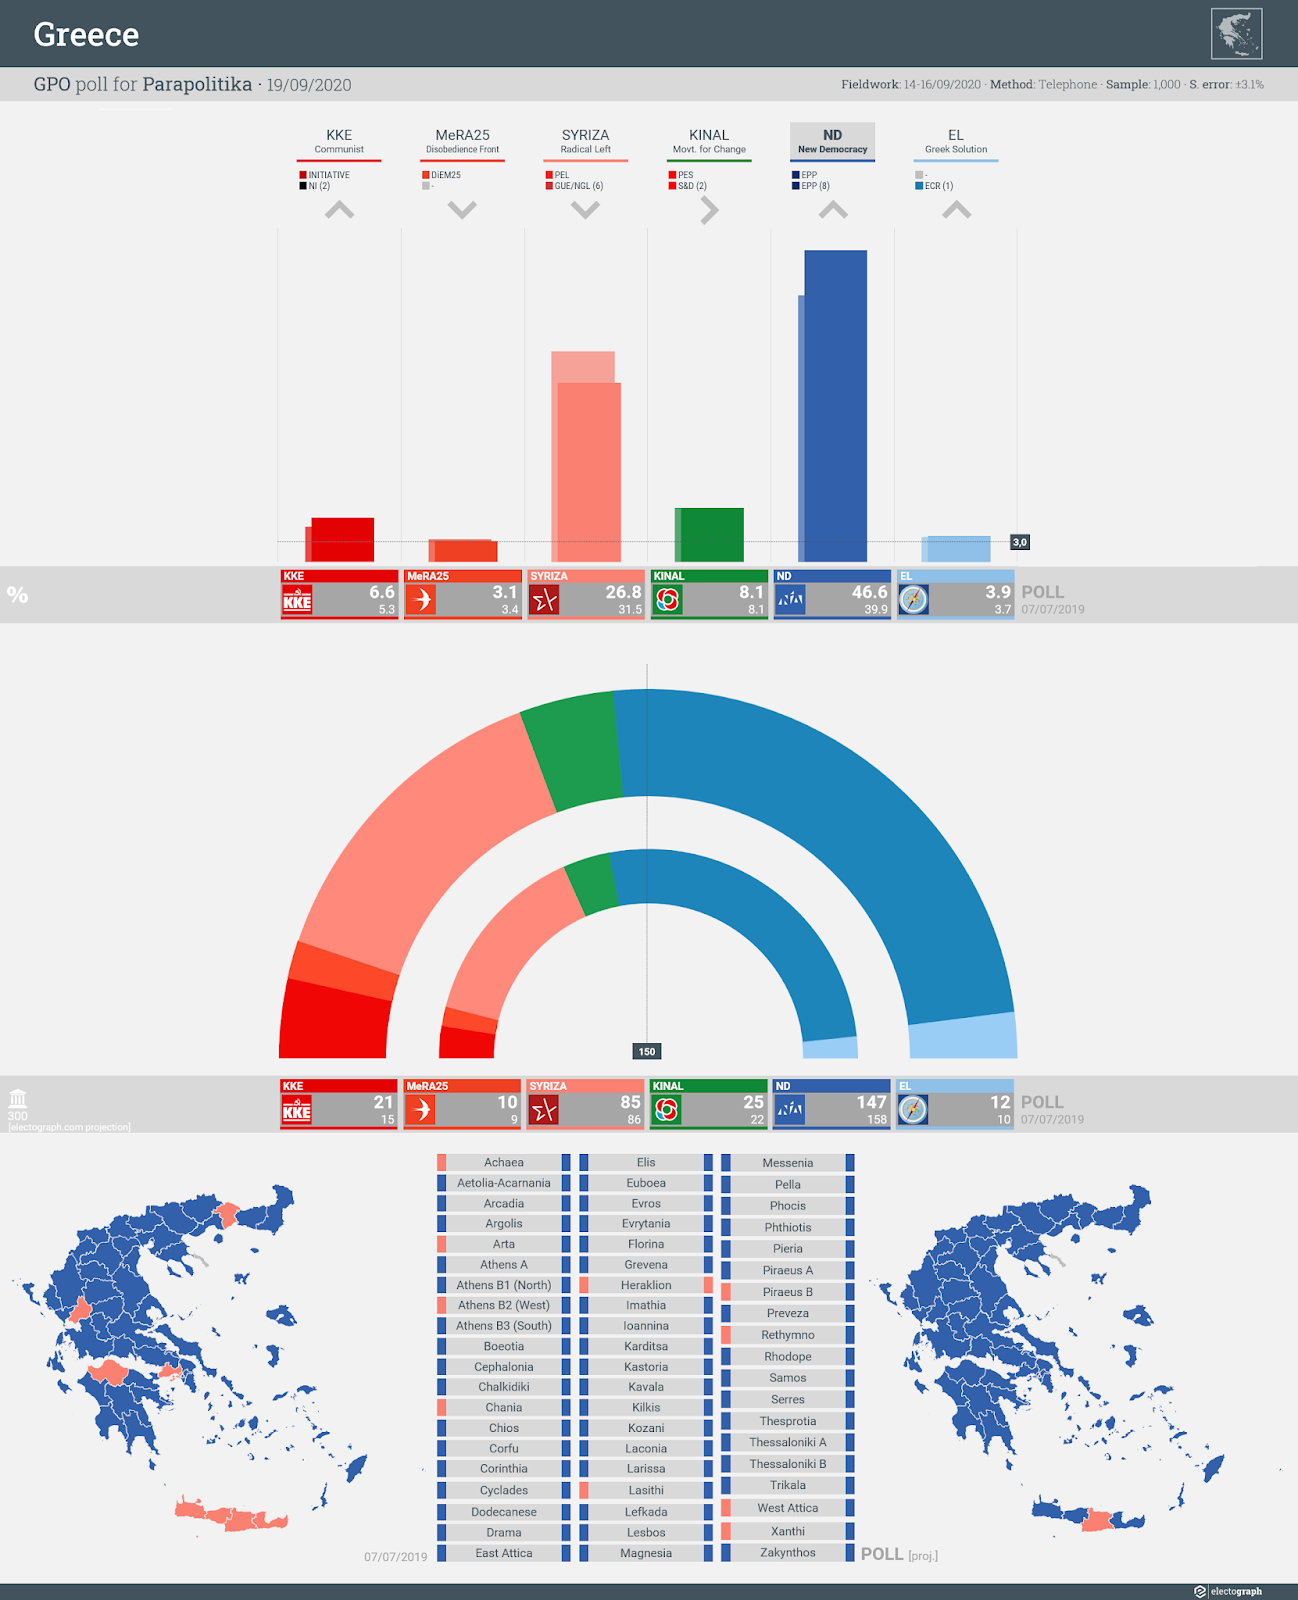 GREECE: GPO poll chart for Parapolitika, 19 September 2020